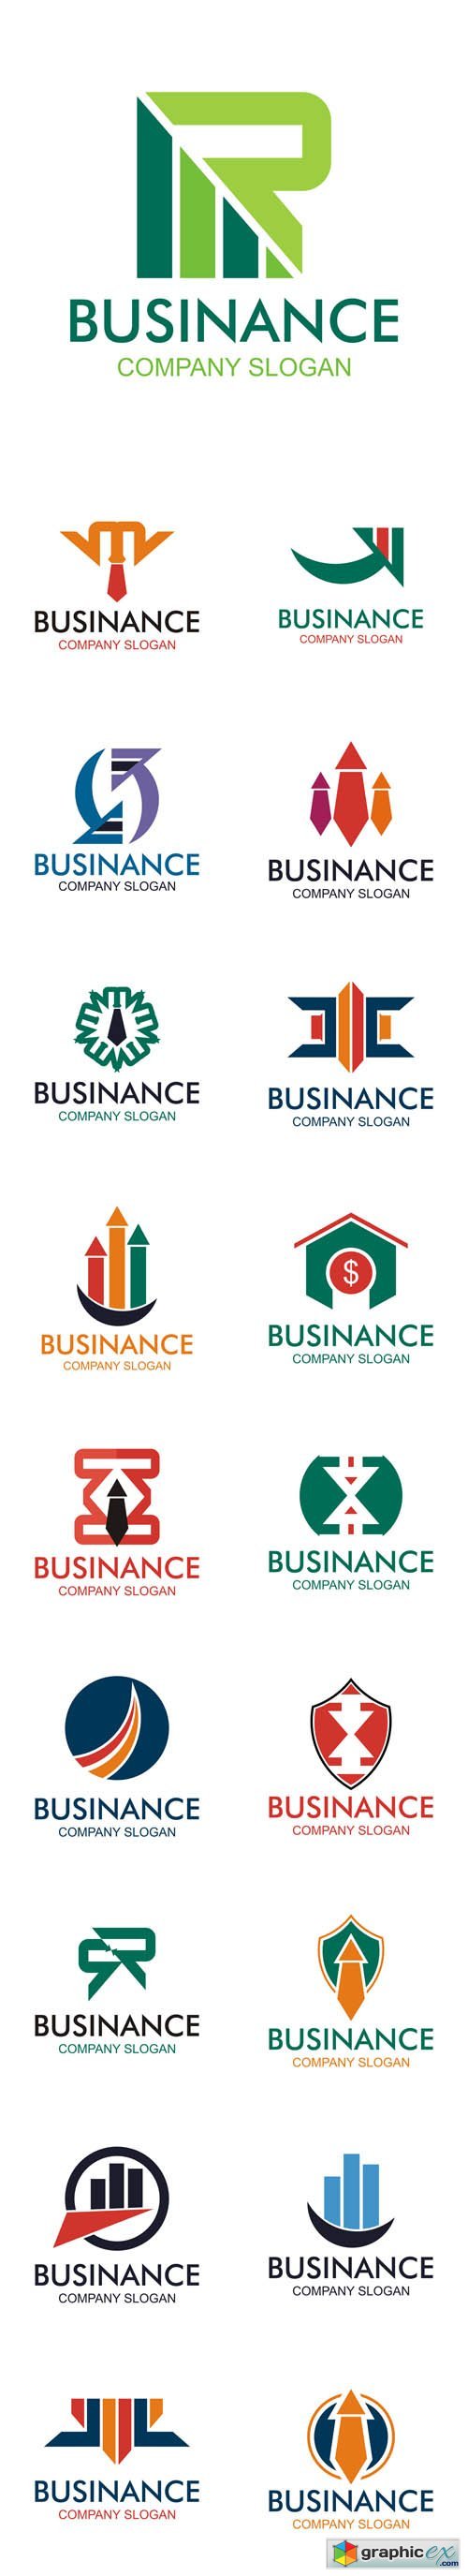 Finance Logos